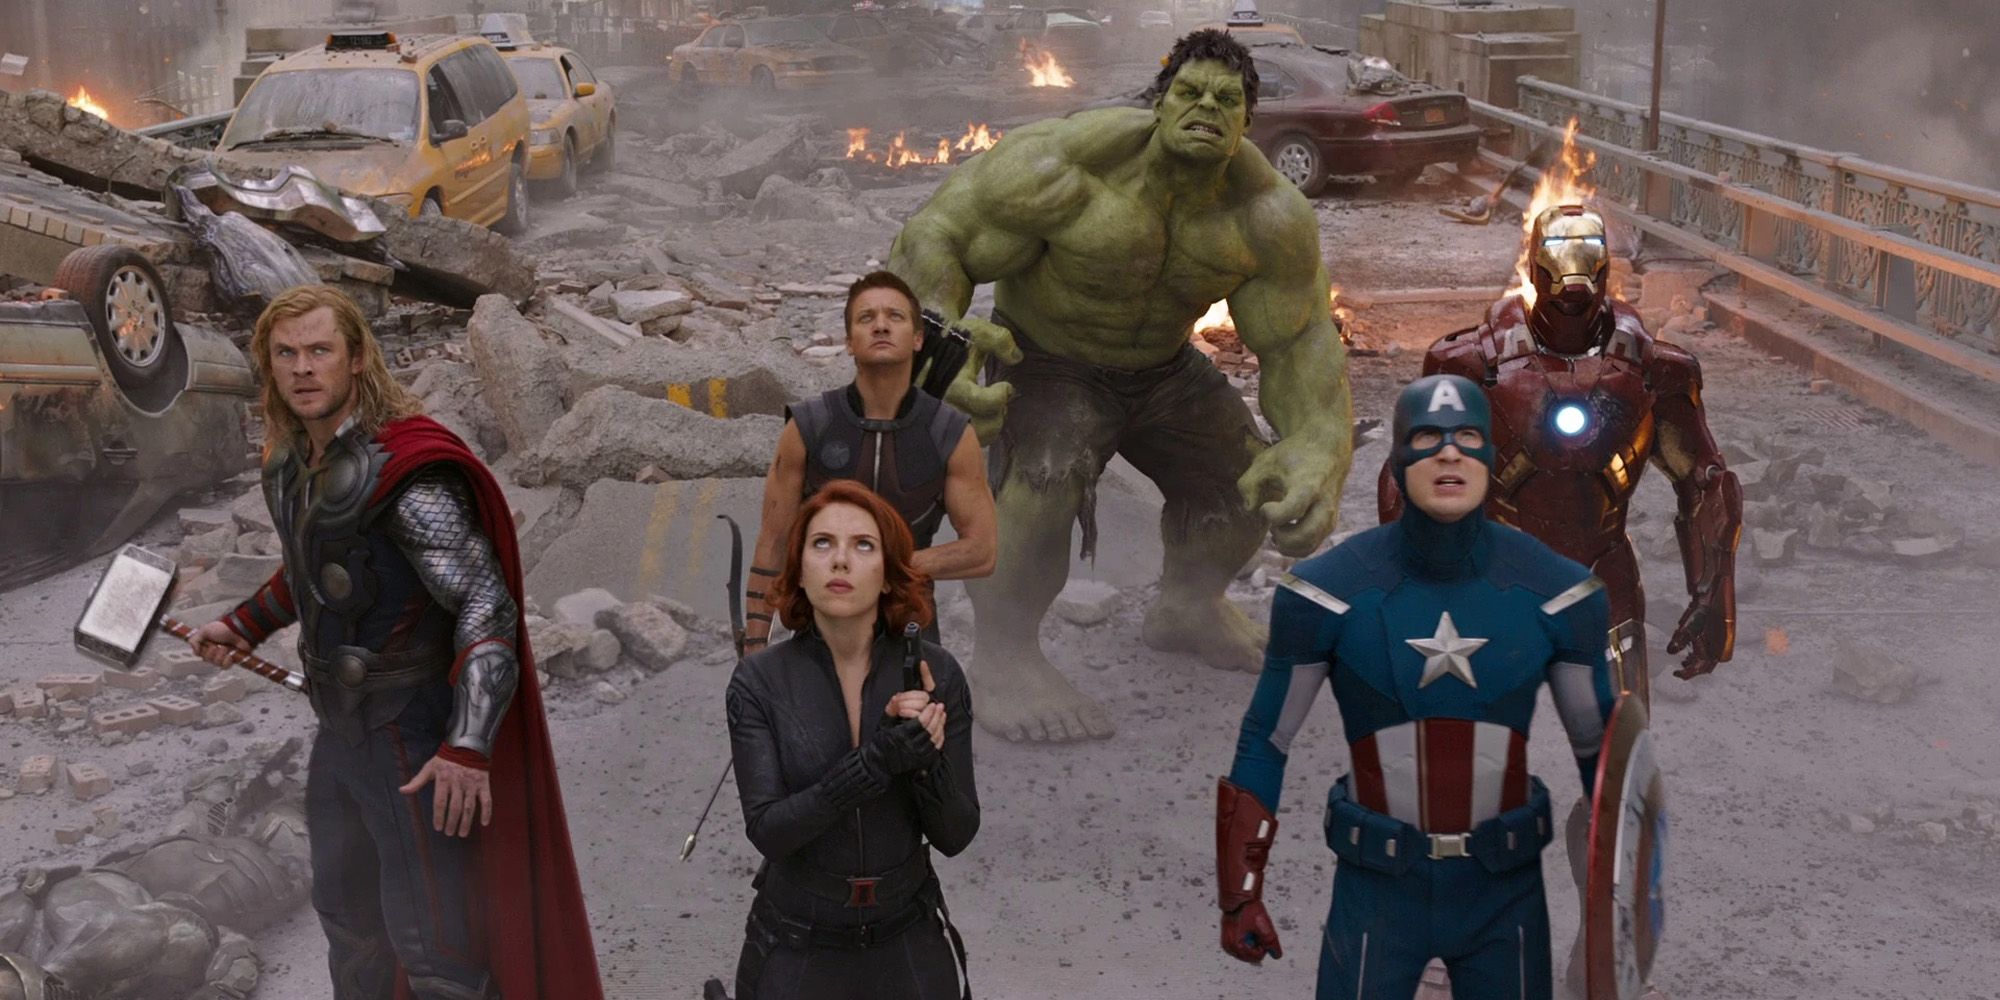 Thor, Hawkeye, Black Widow, Hulk, Captain America and Iron Man assembling as the Avengers